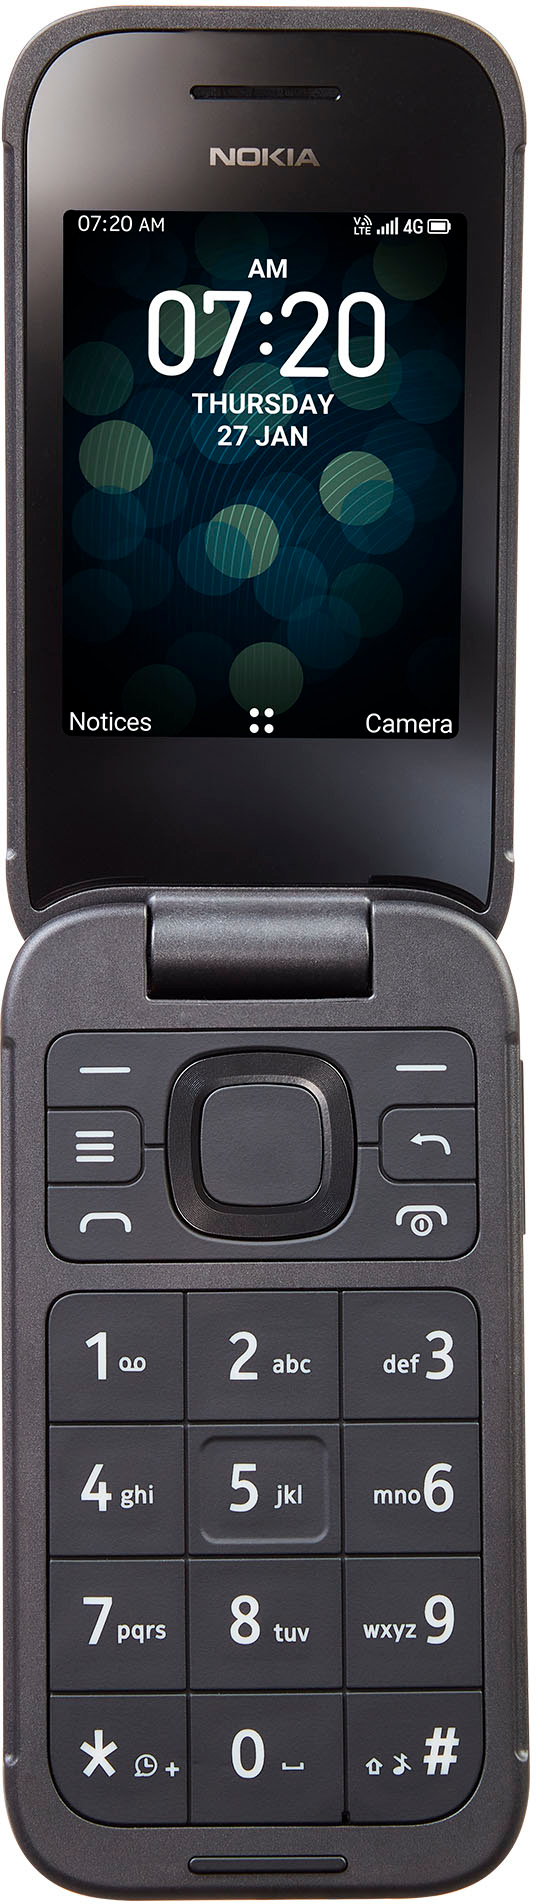 Nokia 2680 - GoPhone black (AT&T) - Prepaid review: Nokia 2680